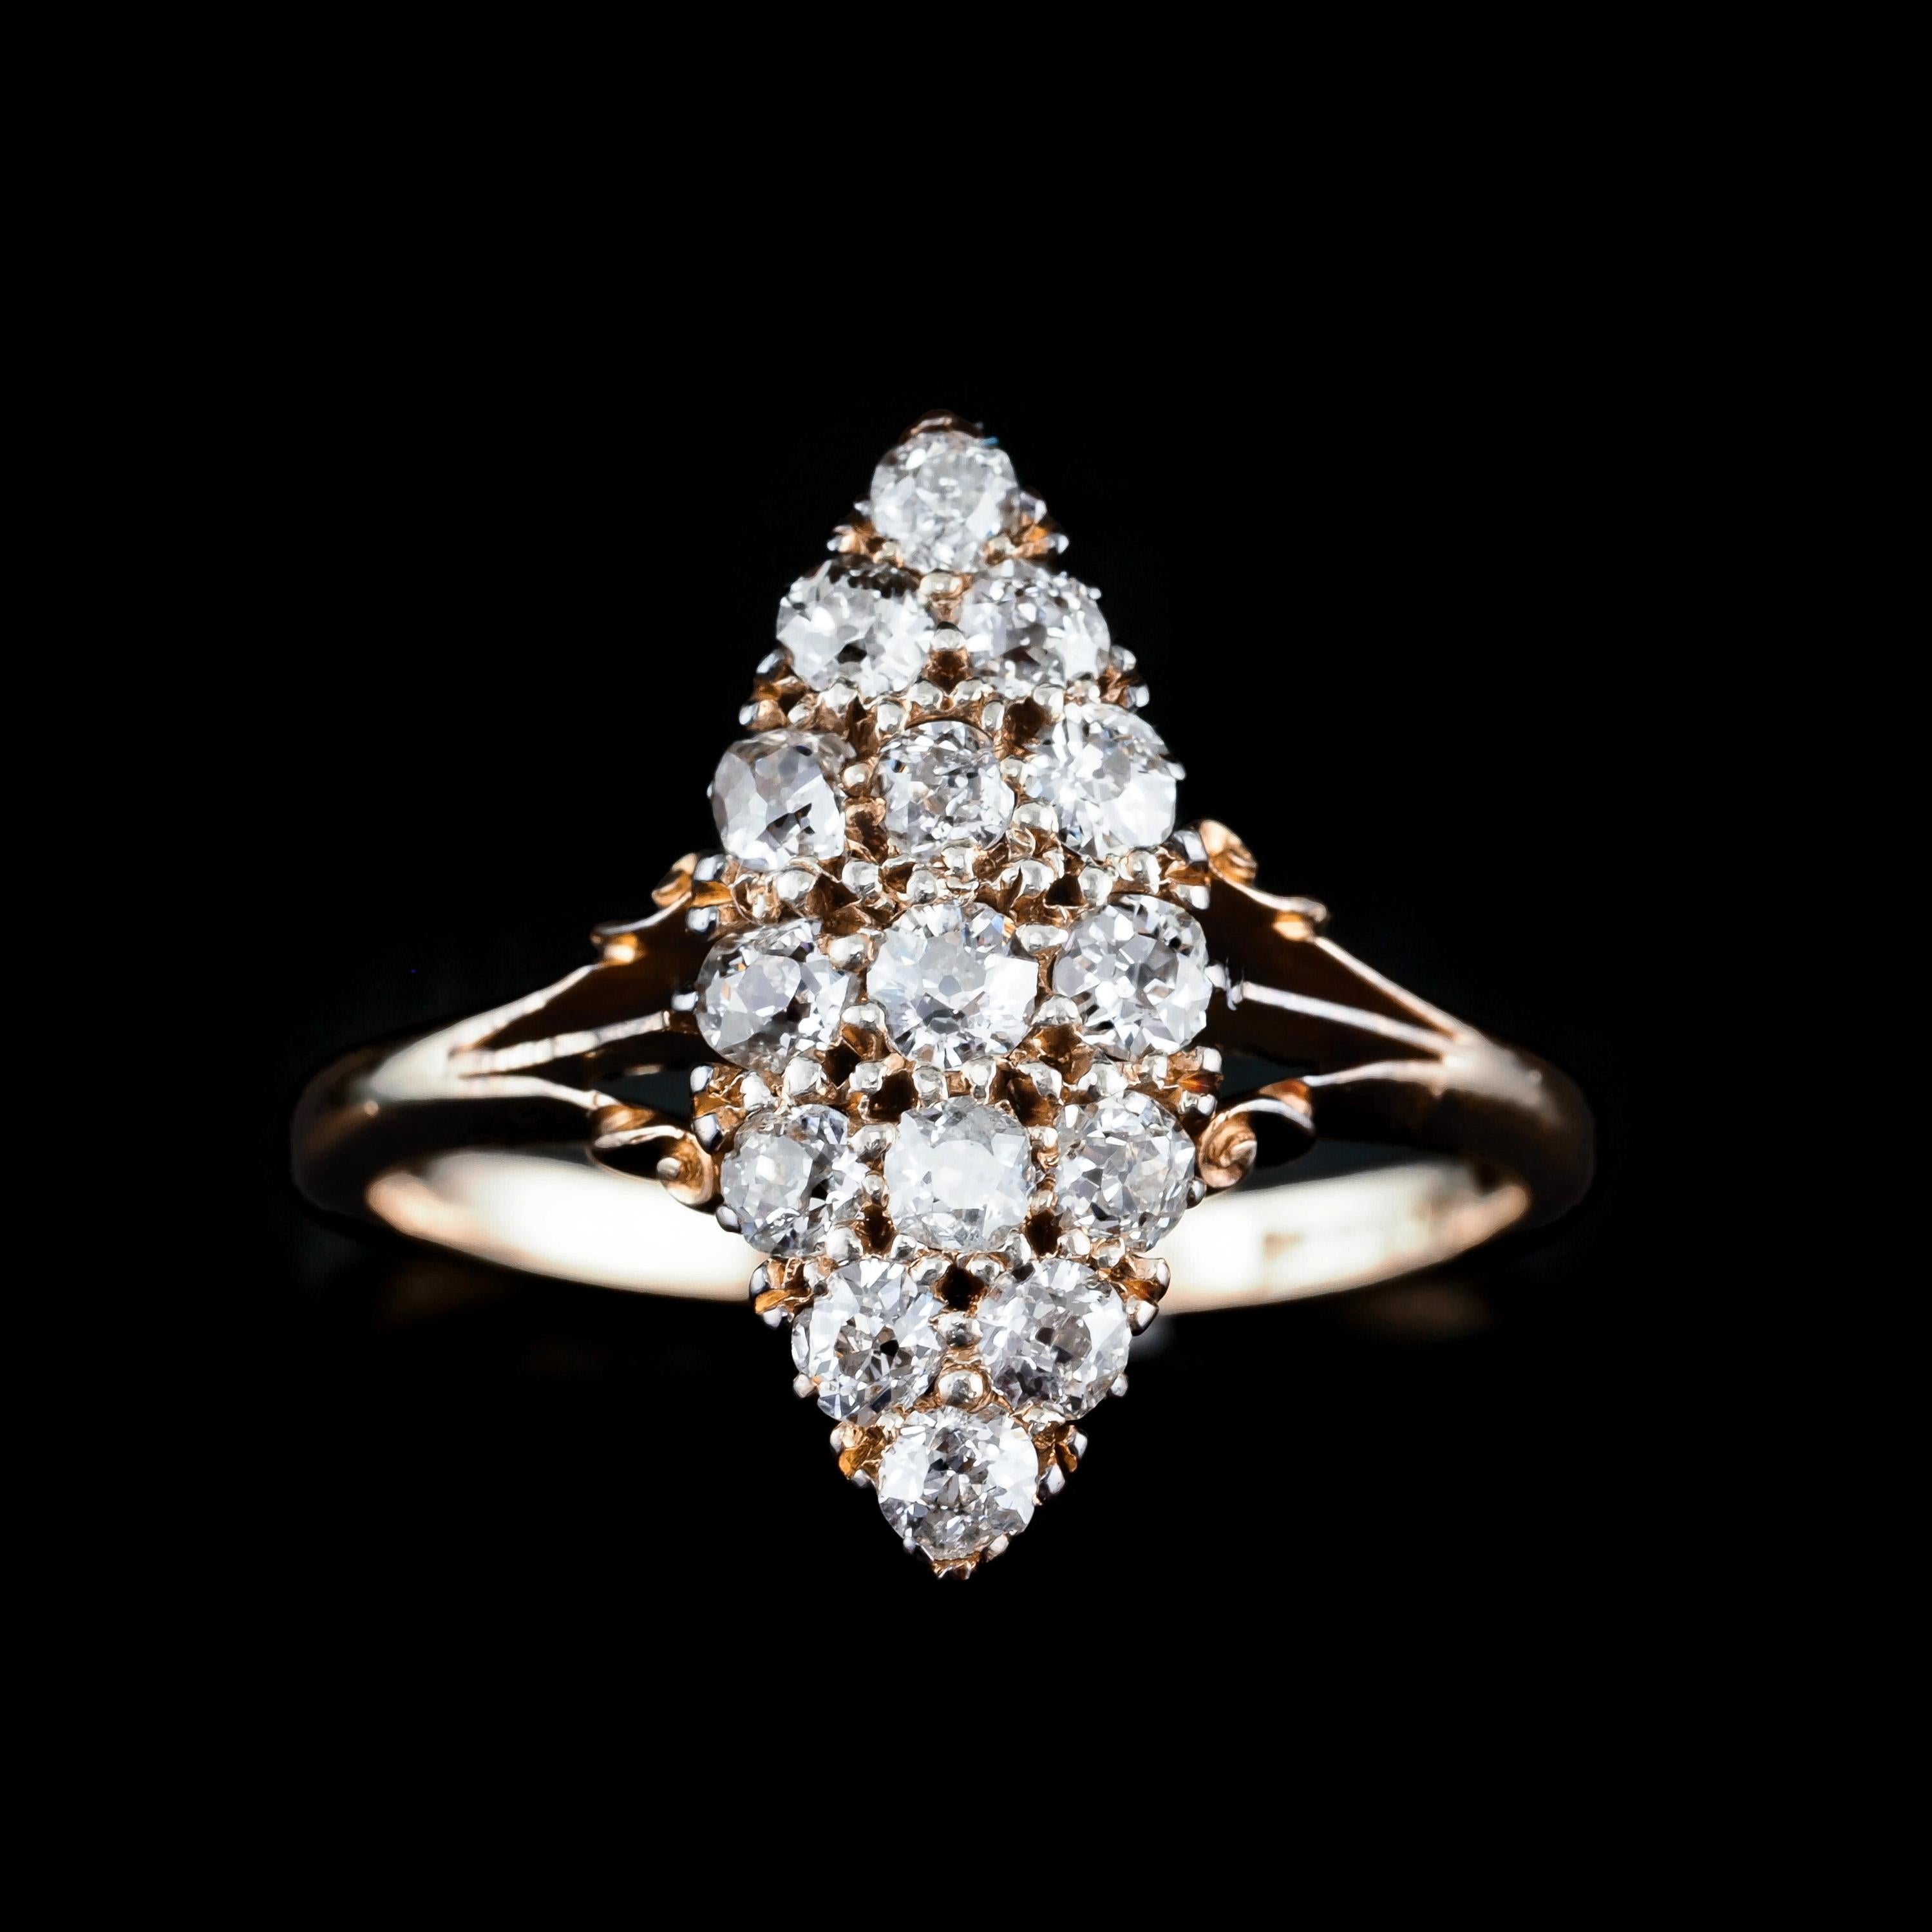 Victorian Antique Diamond Ring 18K Gold Navette/Cluster Design - c.1900s For Sale